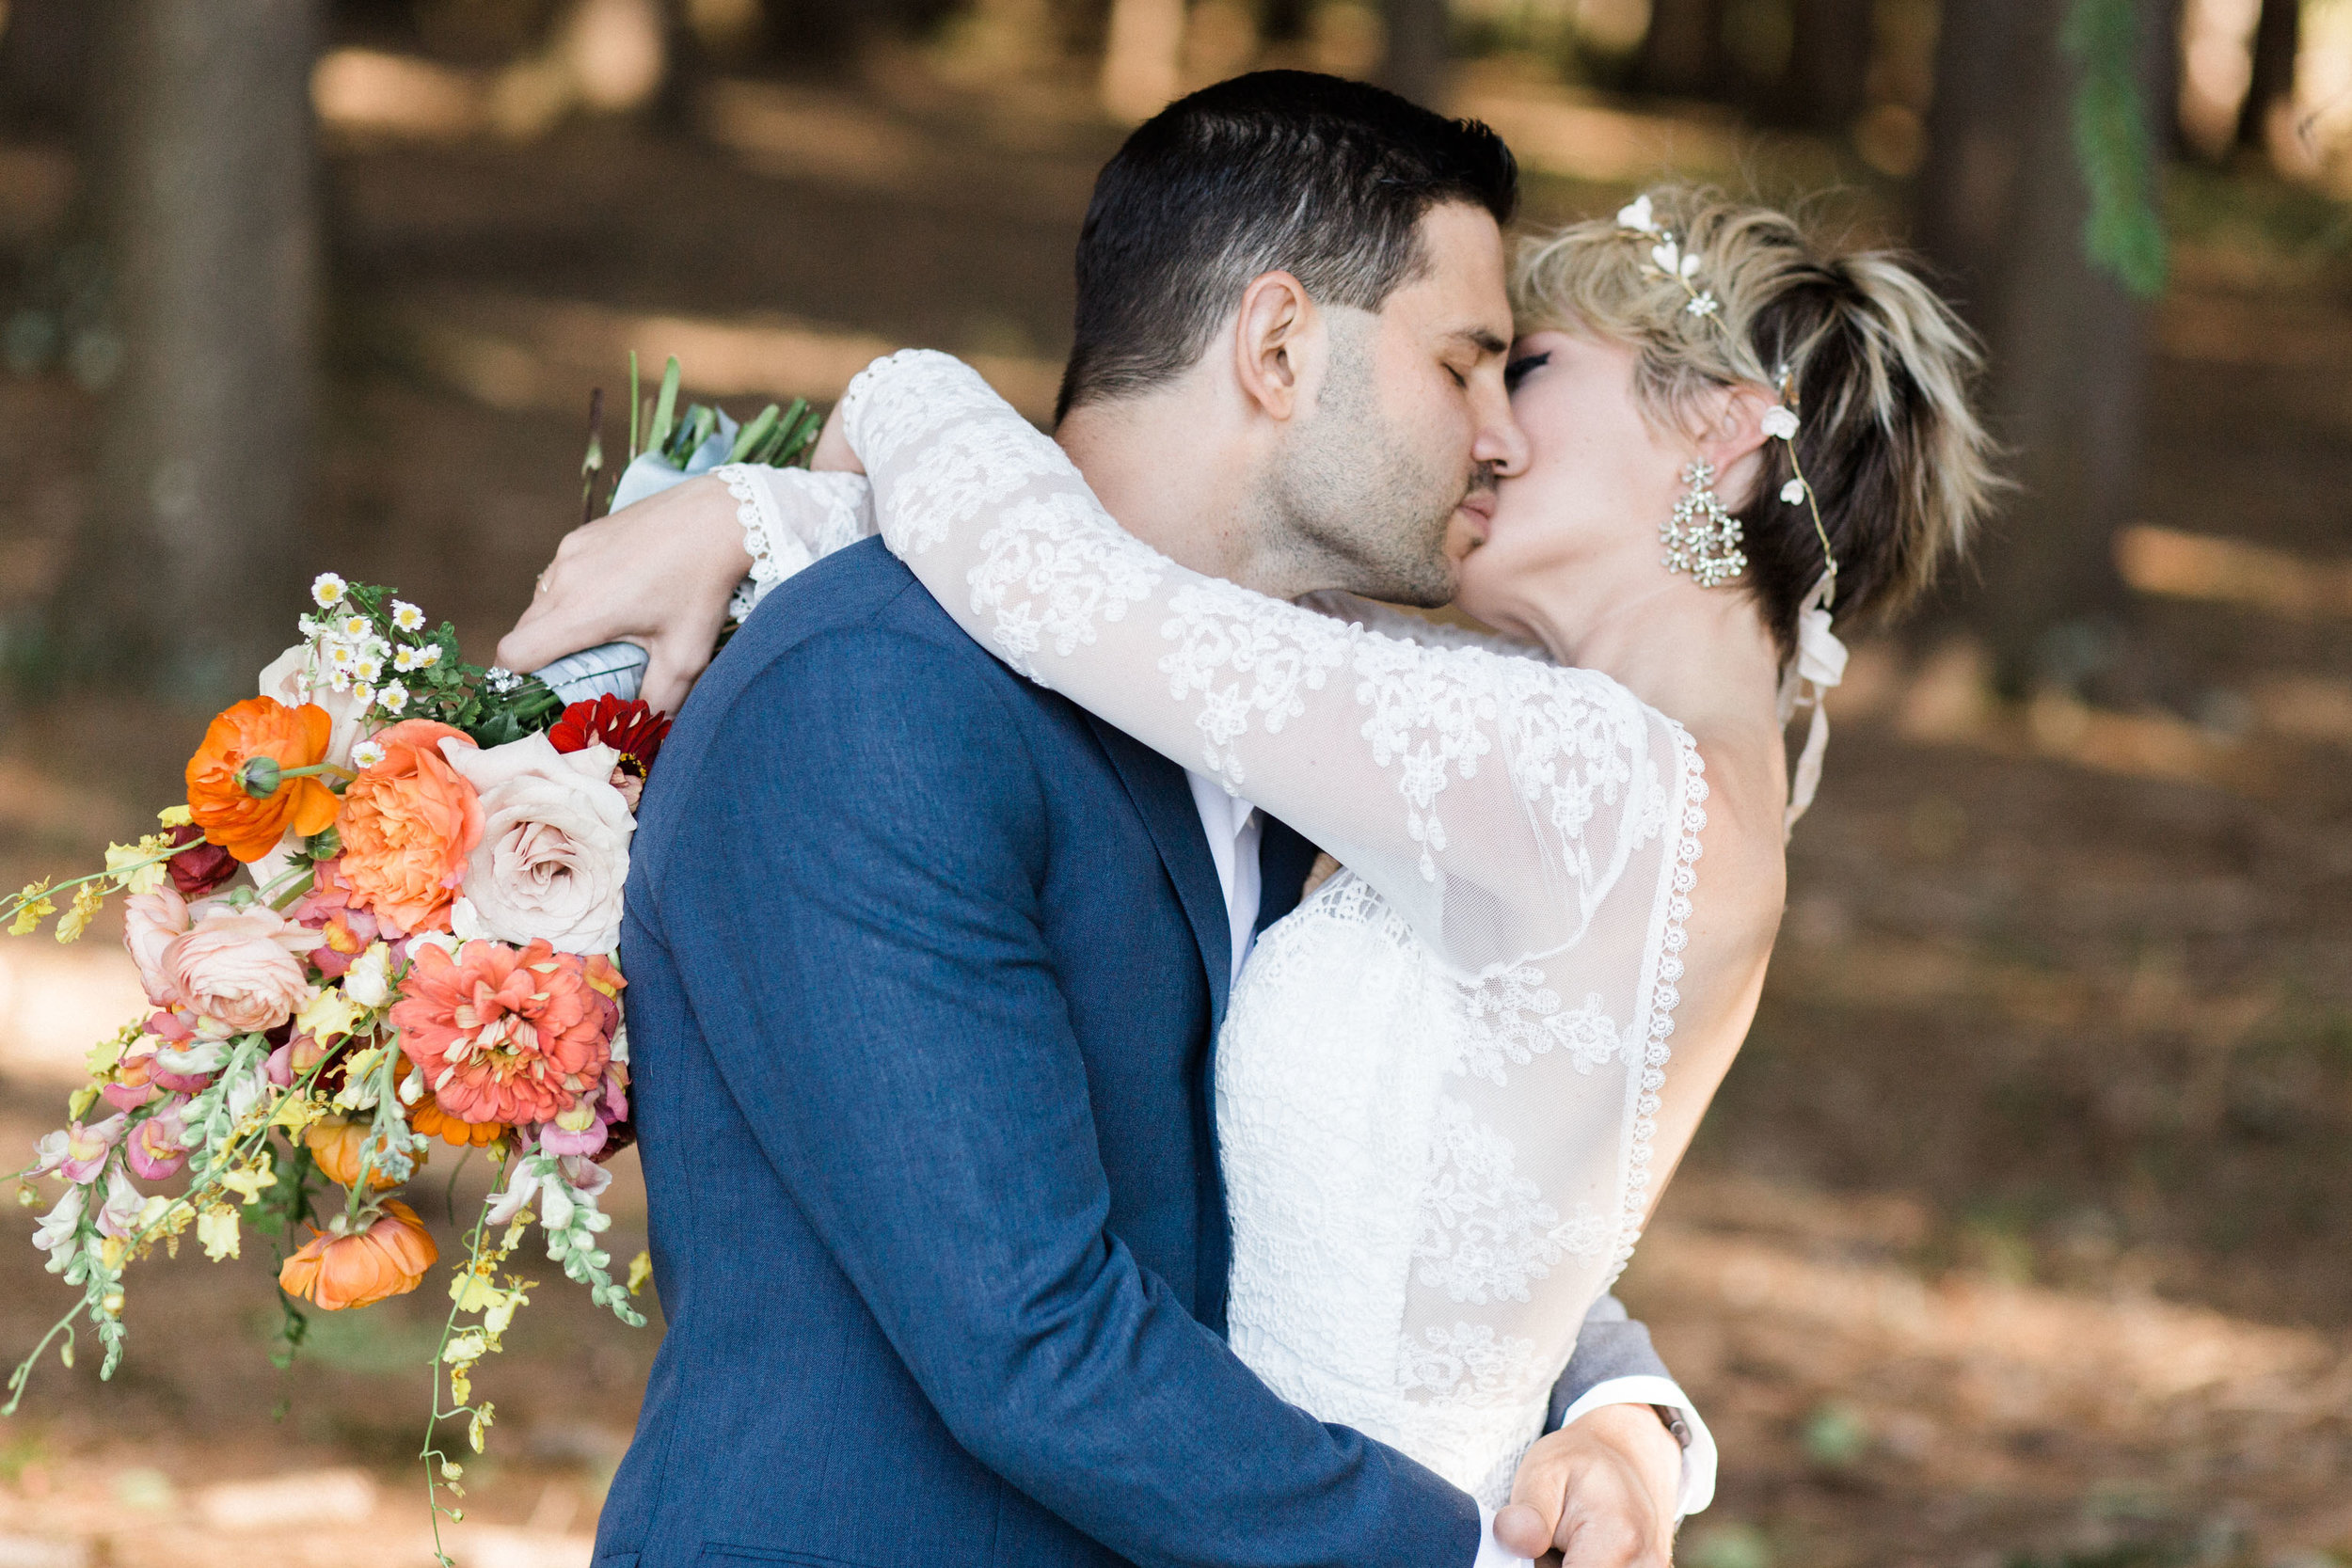 Josh & Hannah || A Fall Wedding in the Catskills